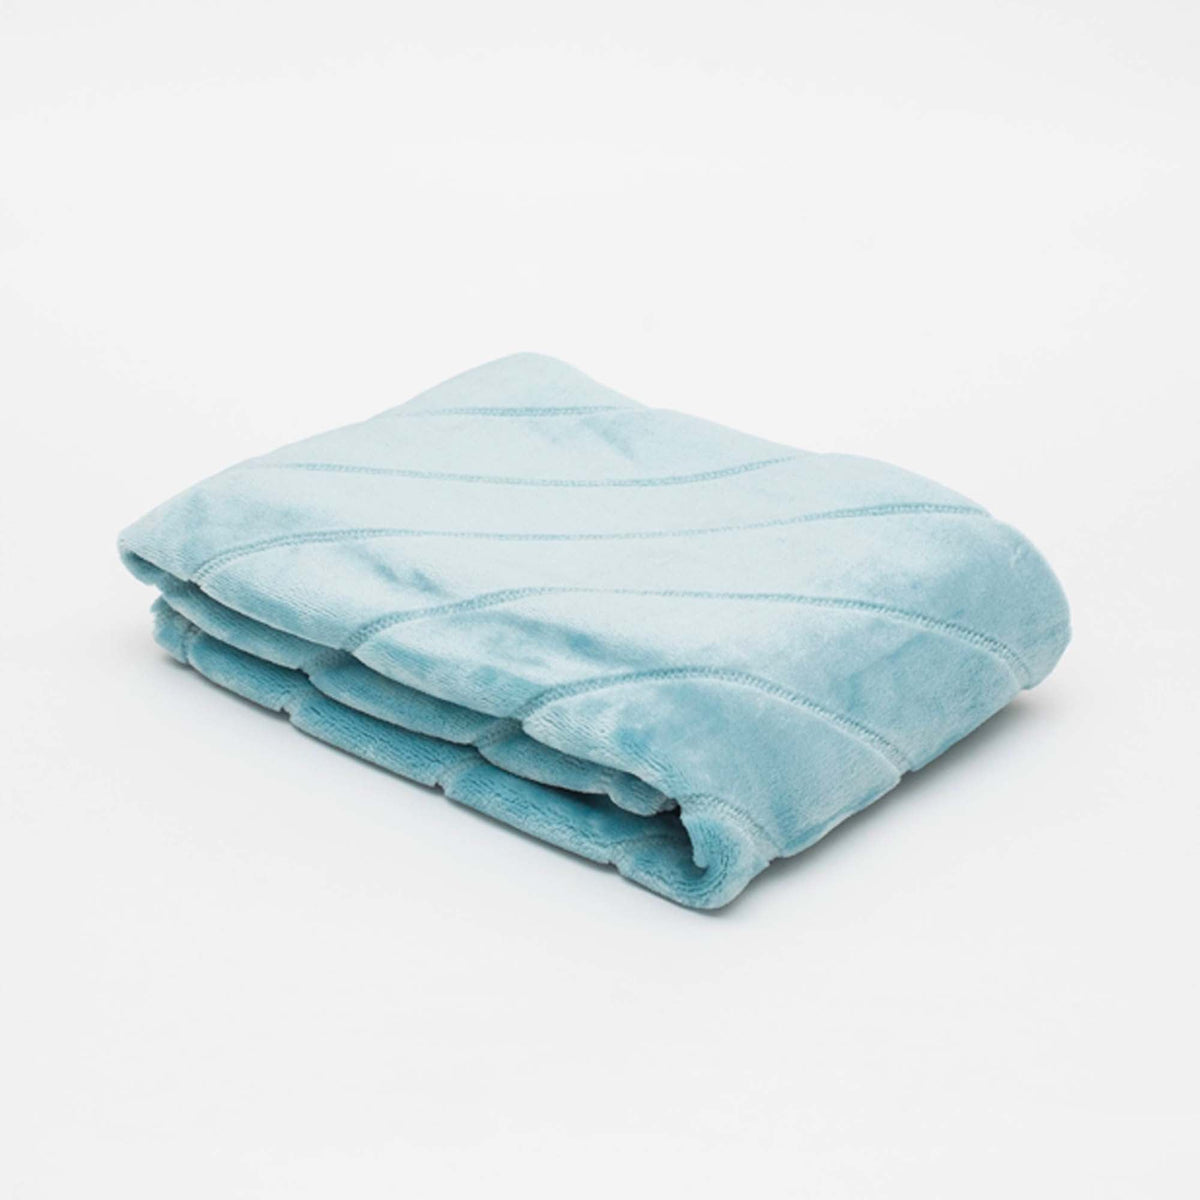 Birch Stitched Baby Quilt - Birch on Luster Loft Fleece - American Blanket Company